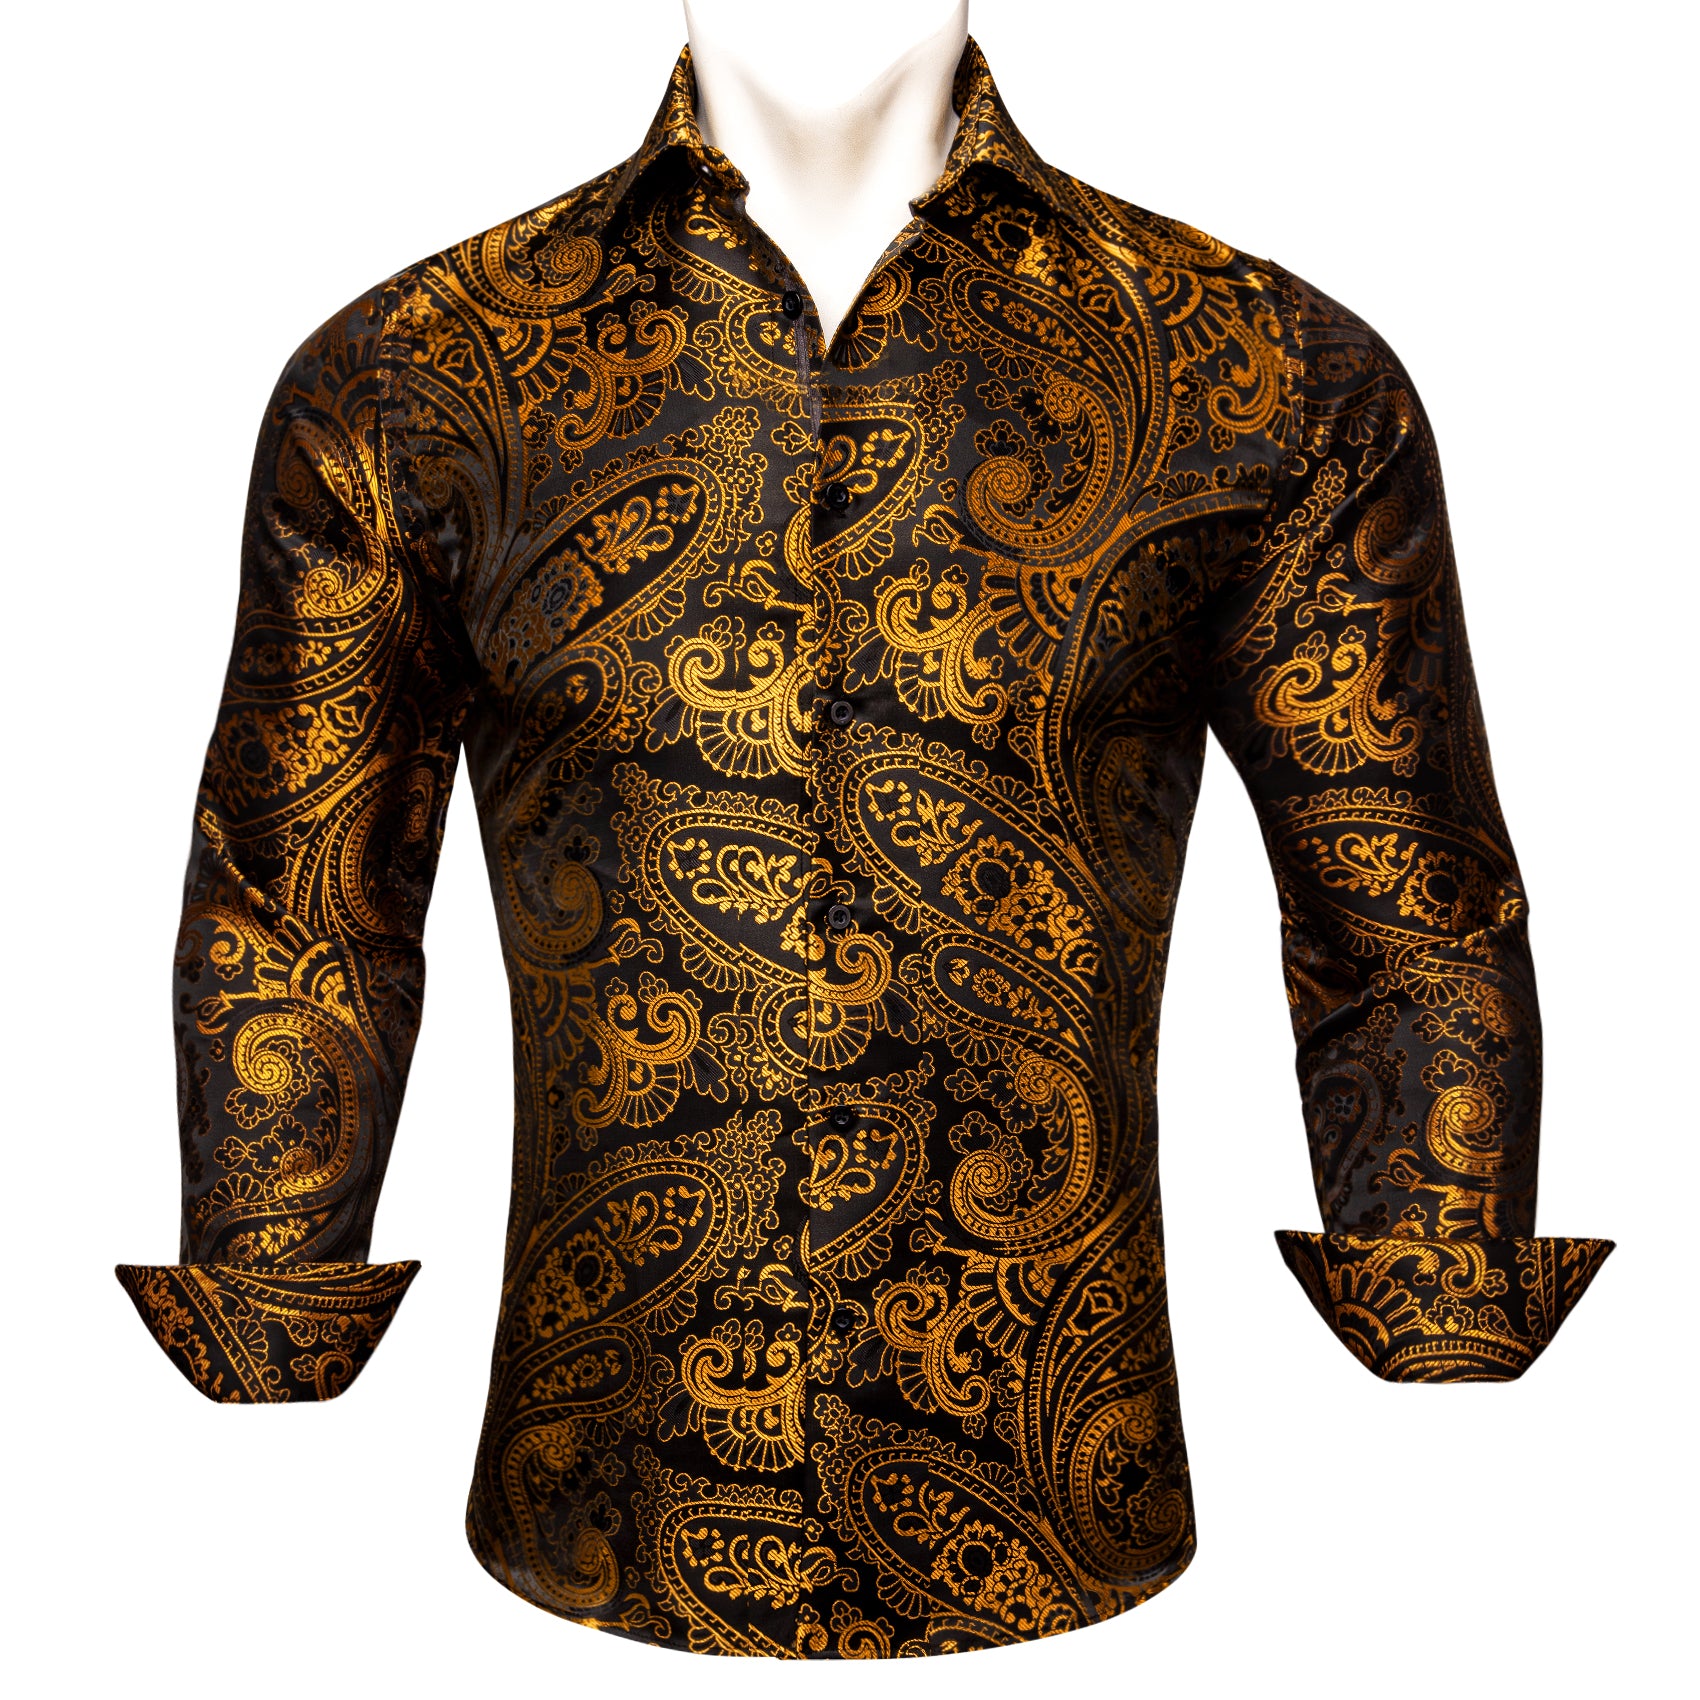 Barry.wang New Gold Black Paisley Silk Men's Shirt